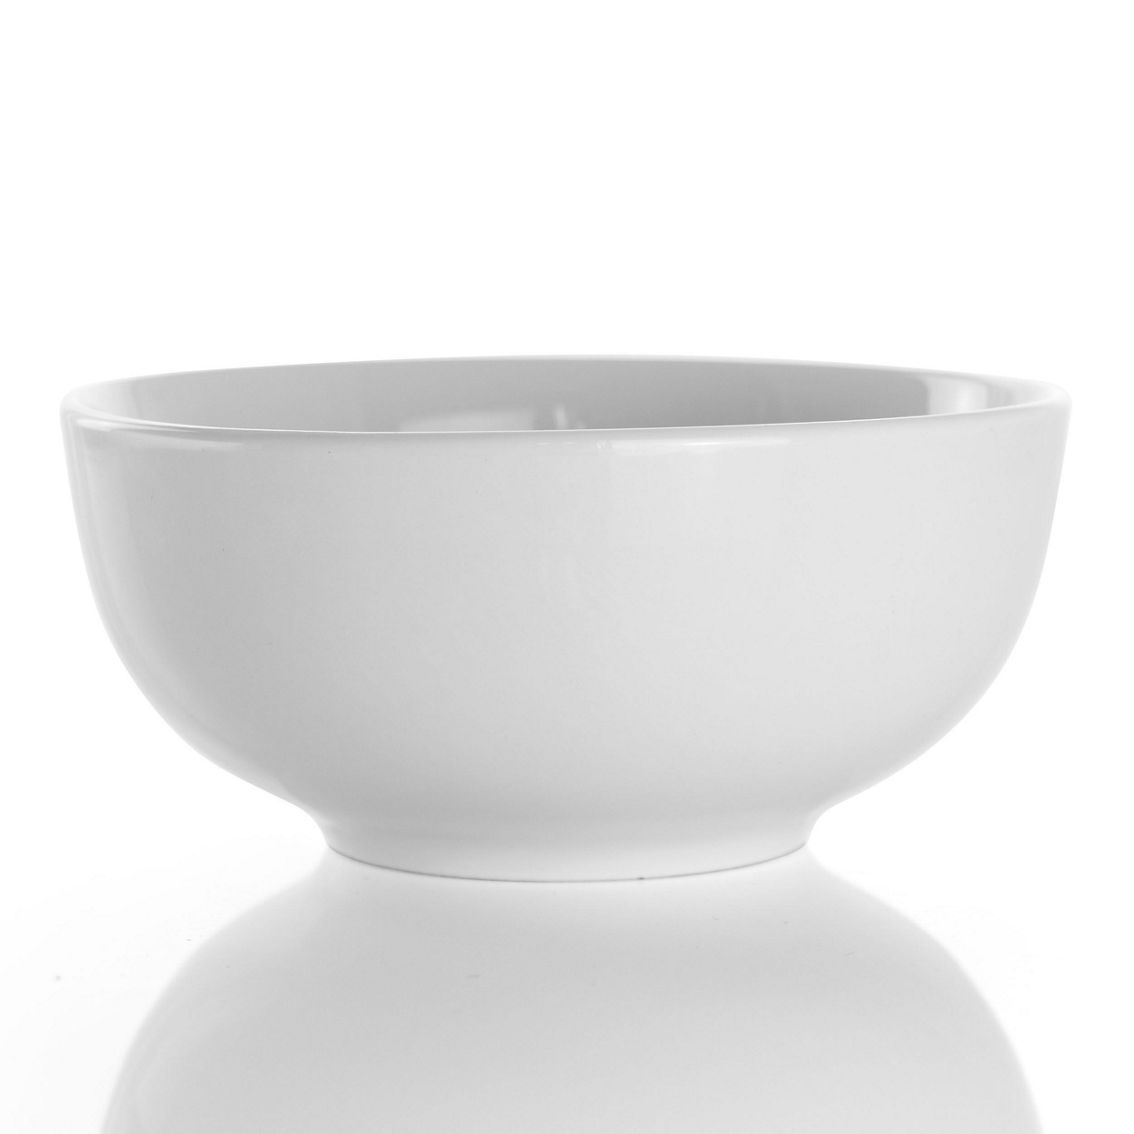 Elama Luna 18 Piece Porcelain Dinnerware Set in White - Image 4 of 5